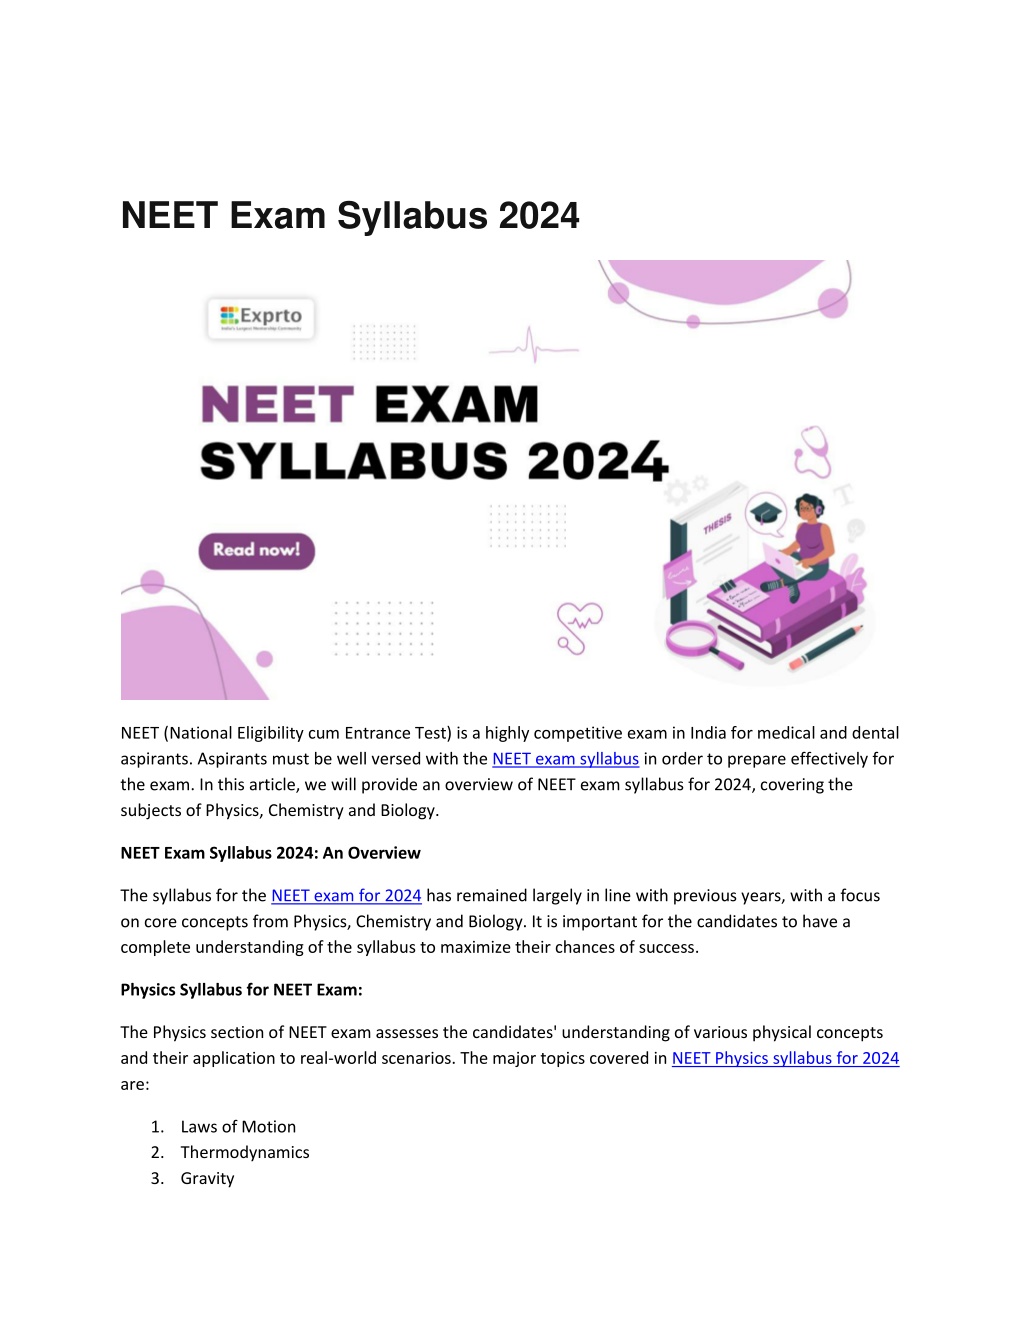 PPT NEET Exam Syllabus 2024 PowerPoint Presentation, free download ID12201692